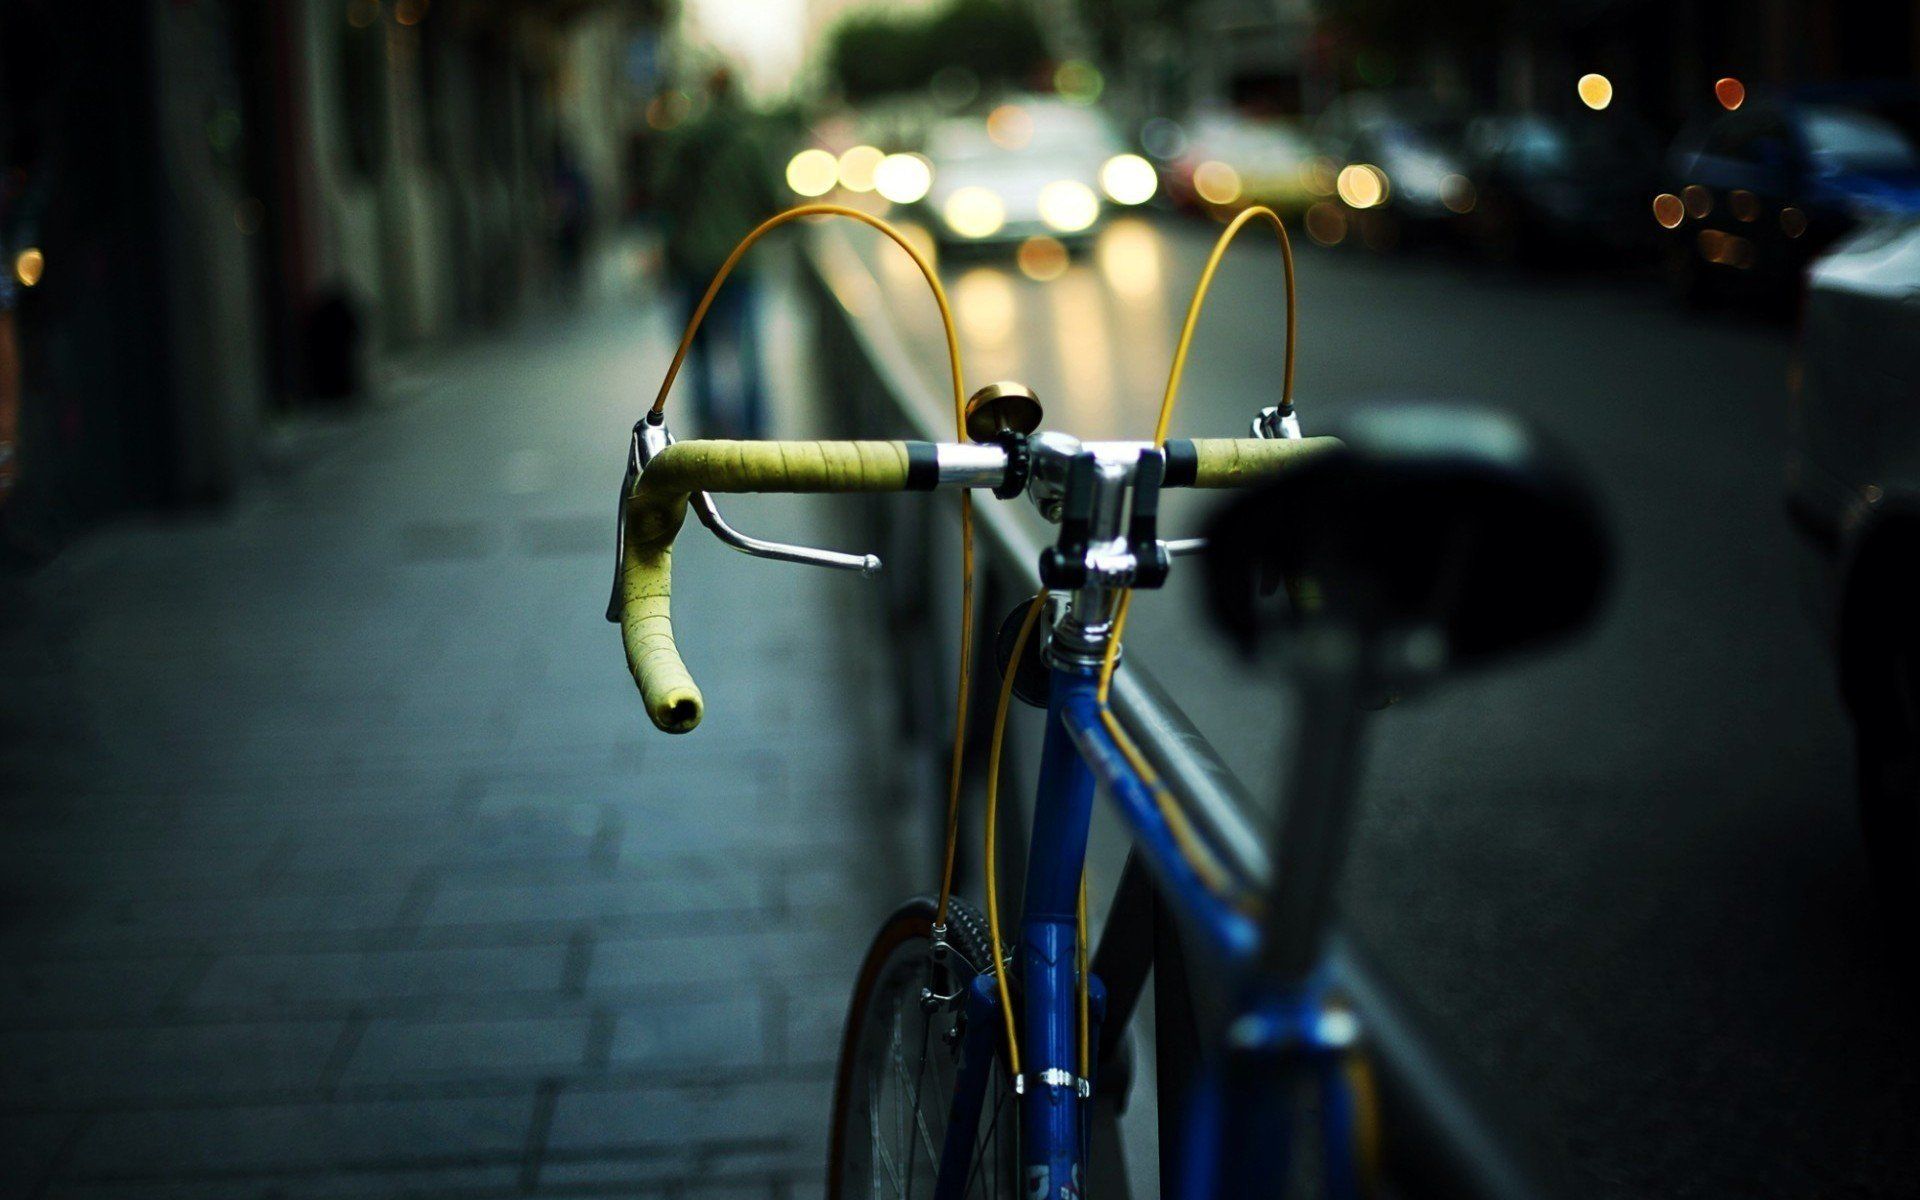 bike wallpaper hd 1920x1200,bicycle,bicycle wheel,bicycle part,bicycle handlebar,vehicle